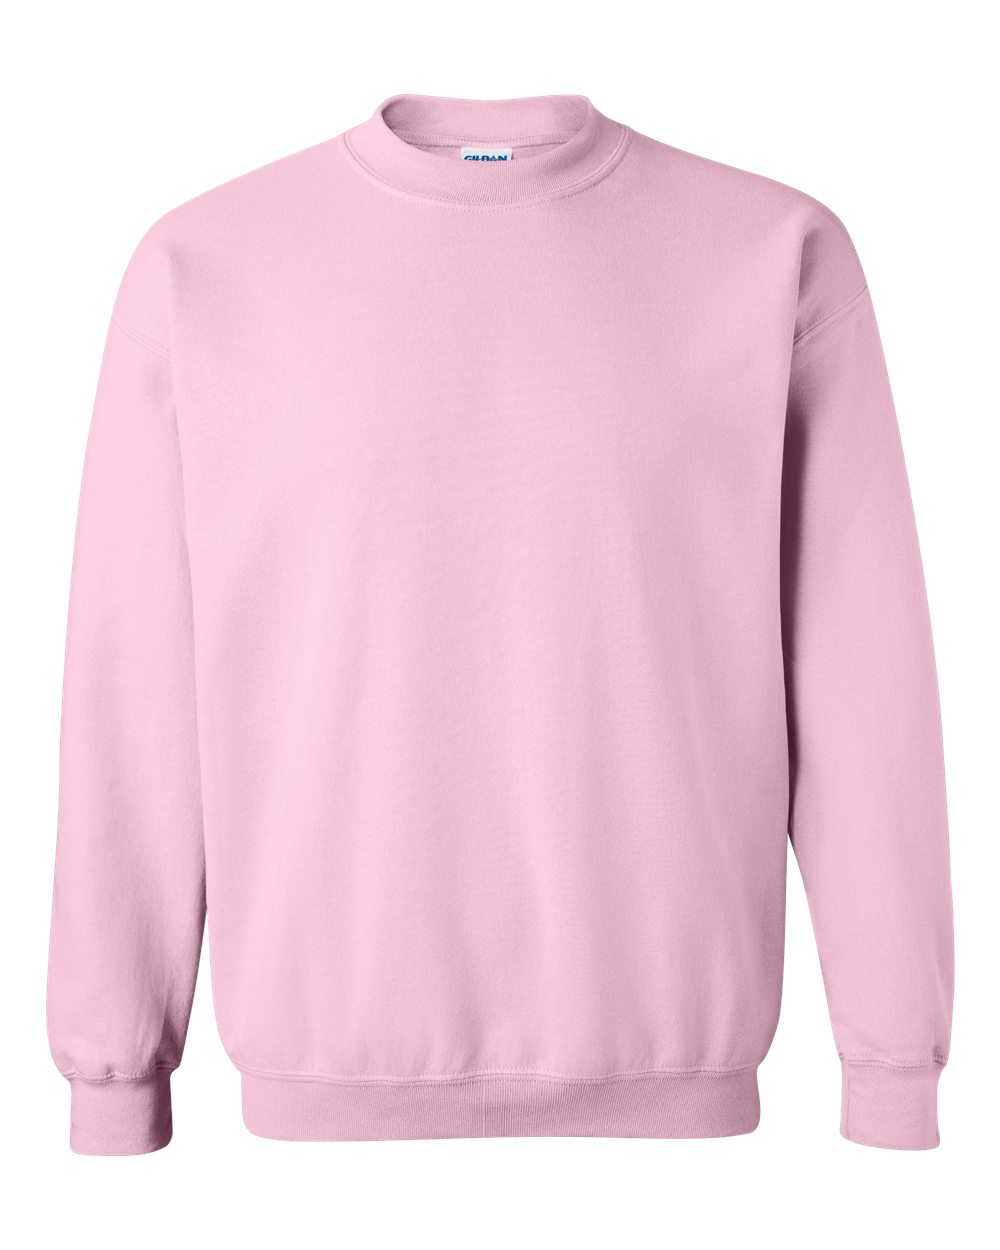 light pink crewneck sweatshirt